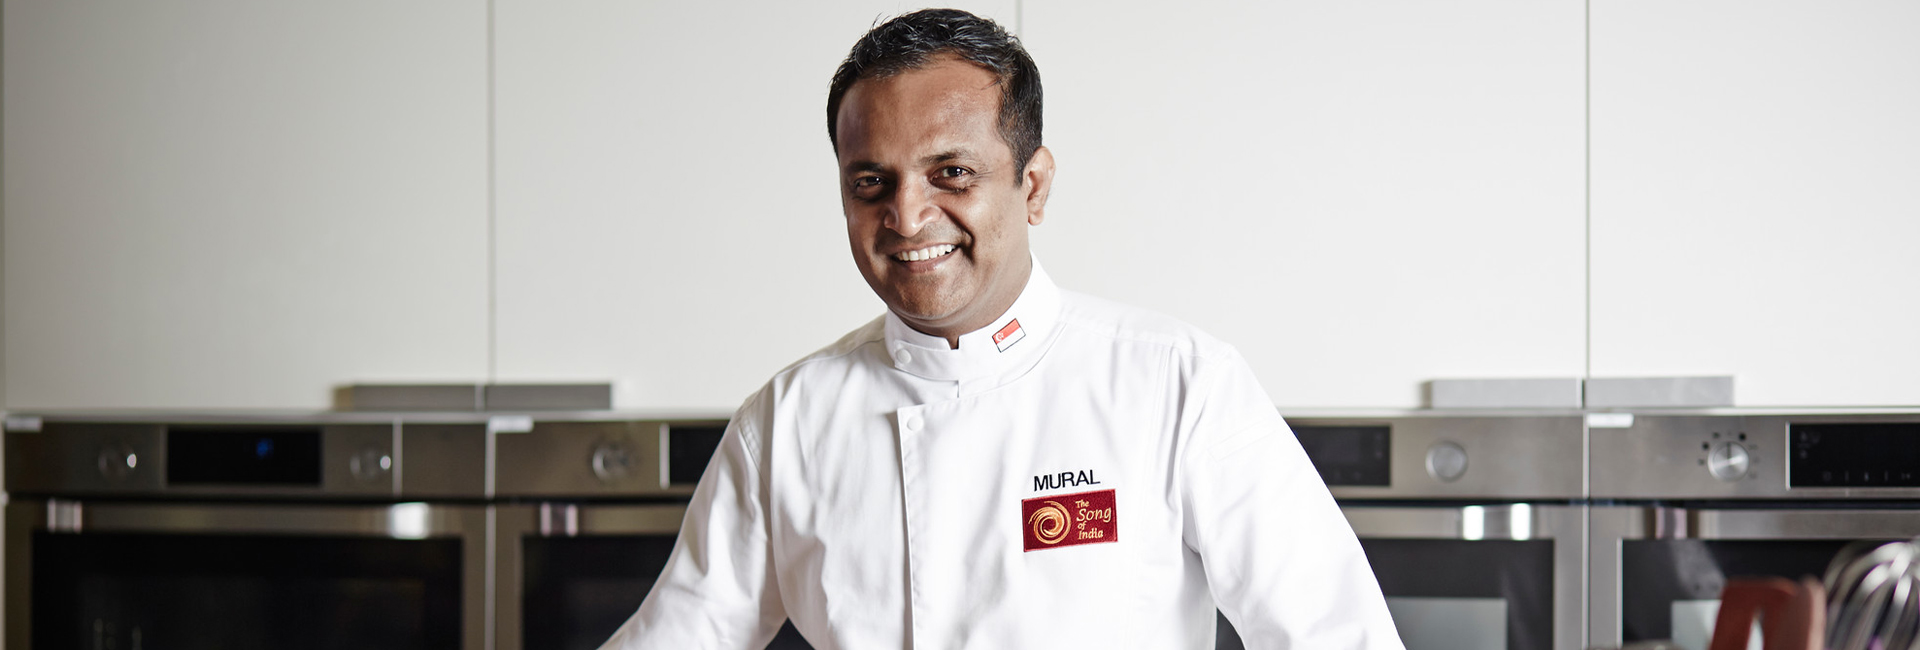 Manjunath Mural: Đầu bếp sao Michelin phục vụ Ấn Độ trên đĩa ở Singapore